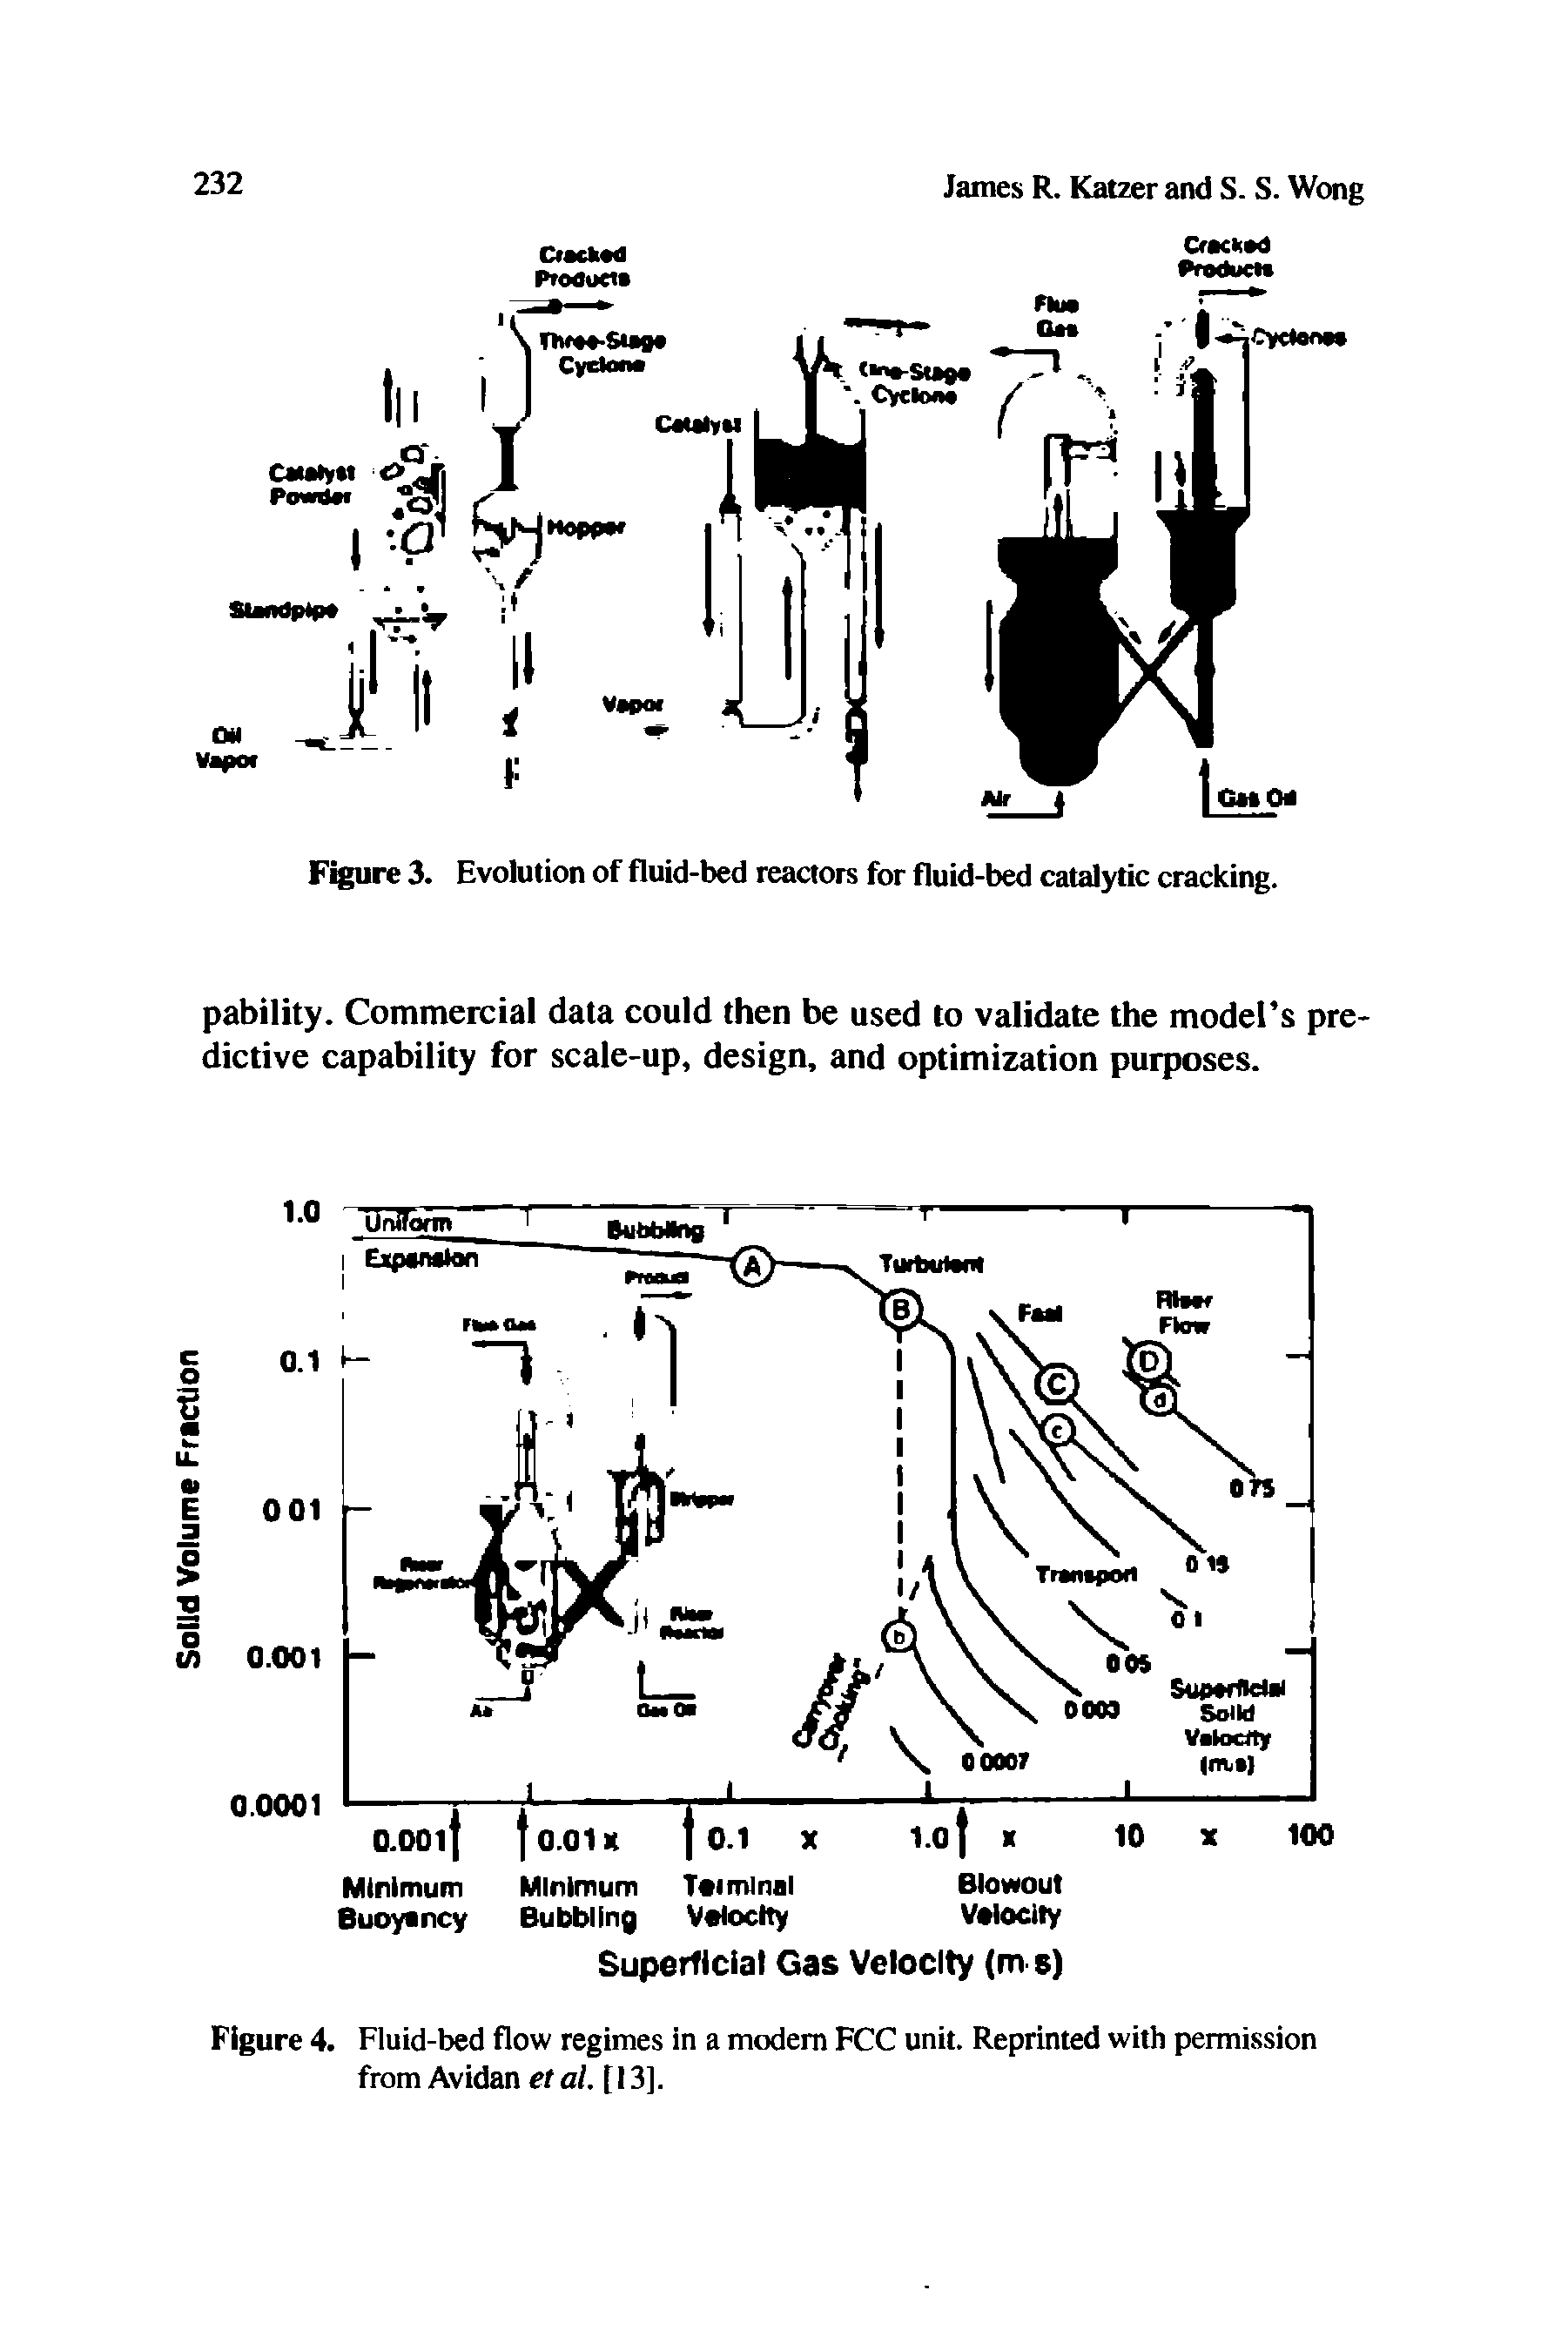 Figure 3. Evolution of fluid-bed reactors for fluid-bed catalytic cracking.